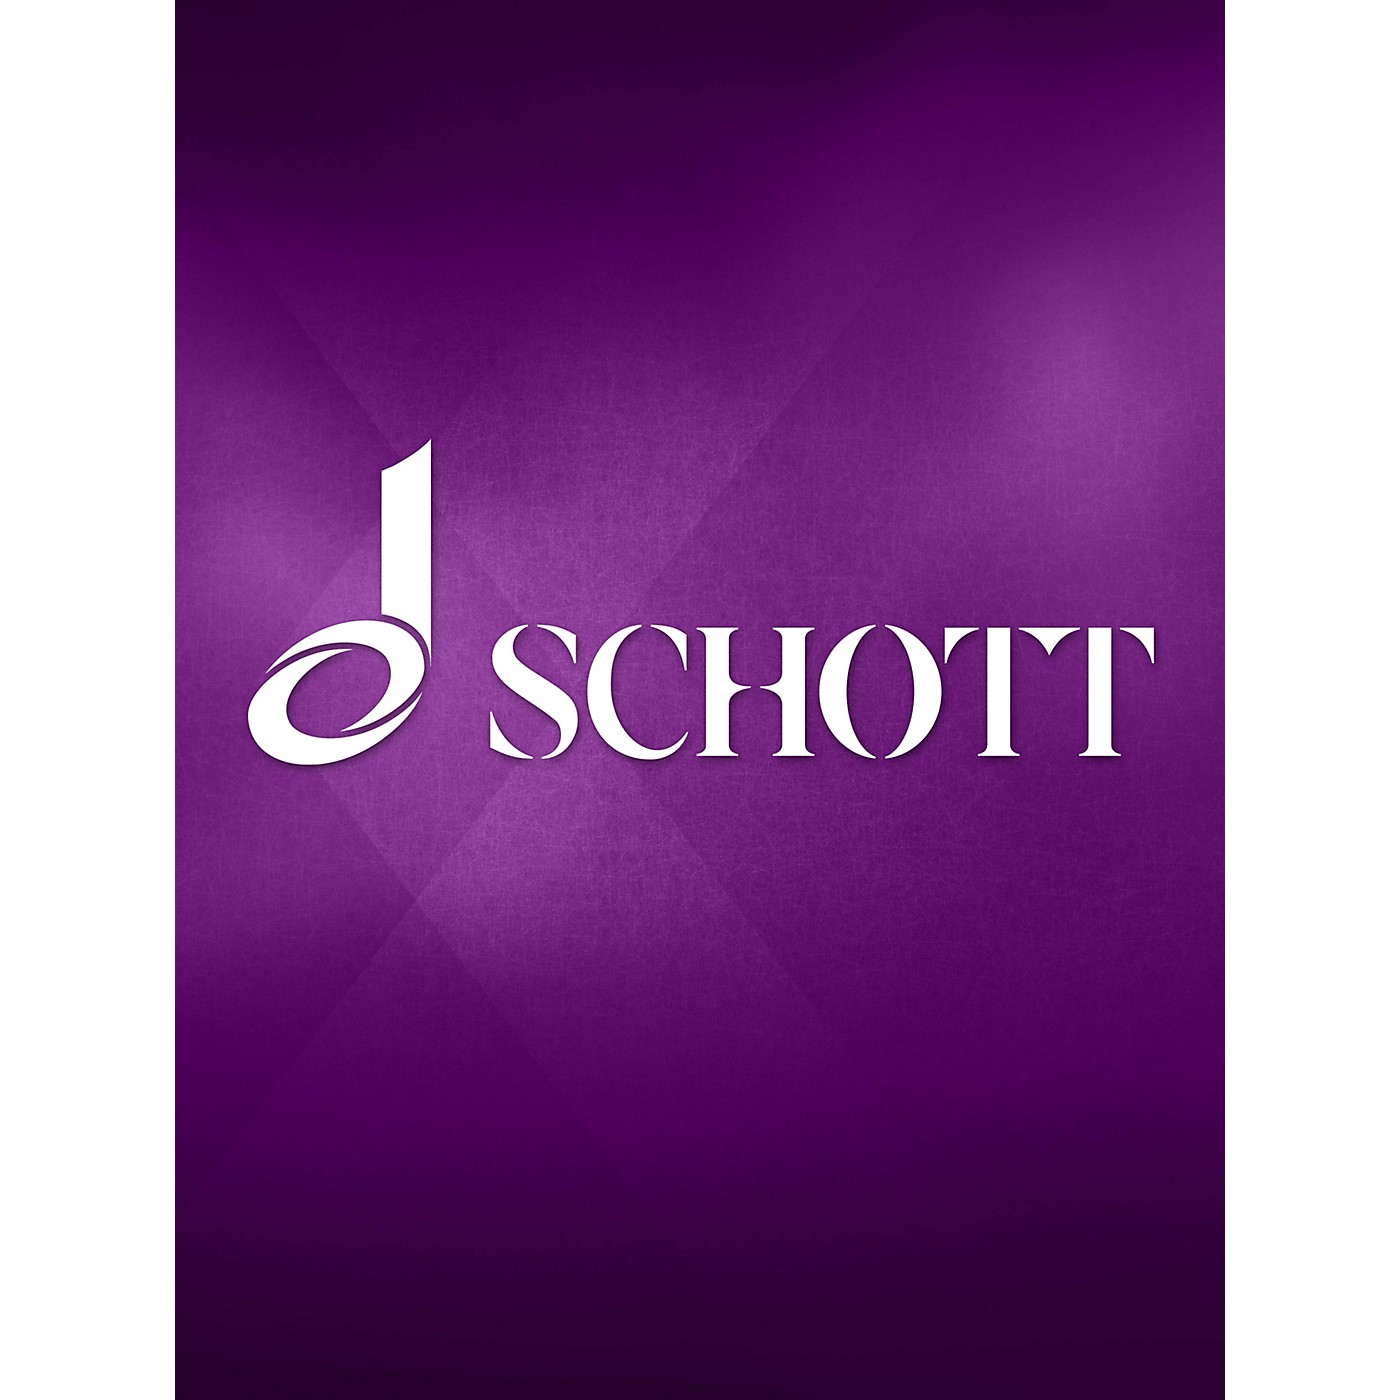 Eulenburg Conc Grosso in F Maj, Op 3/4a (Oboe Conc - Viola Part) Schott Series by Georg Friedrich Händel thumbnail